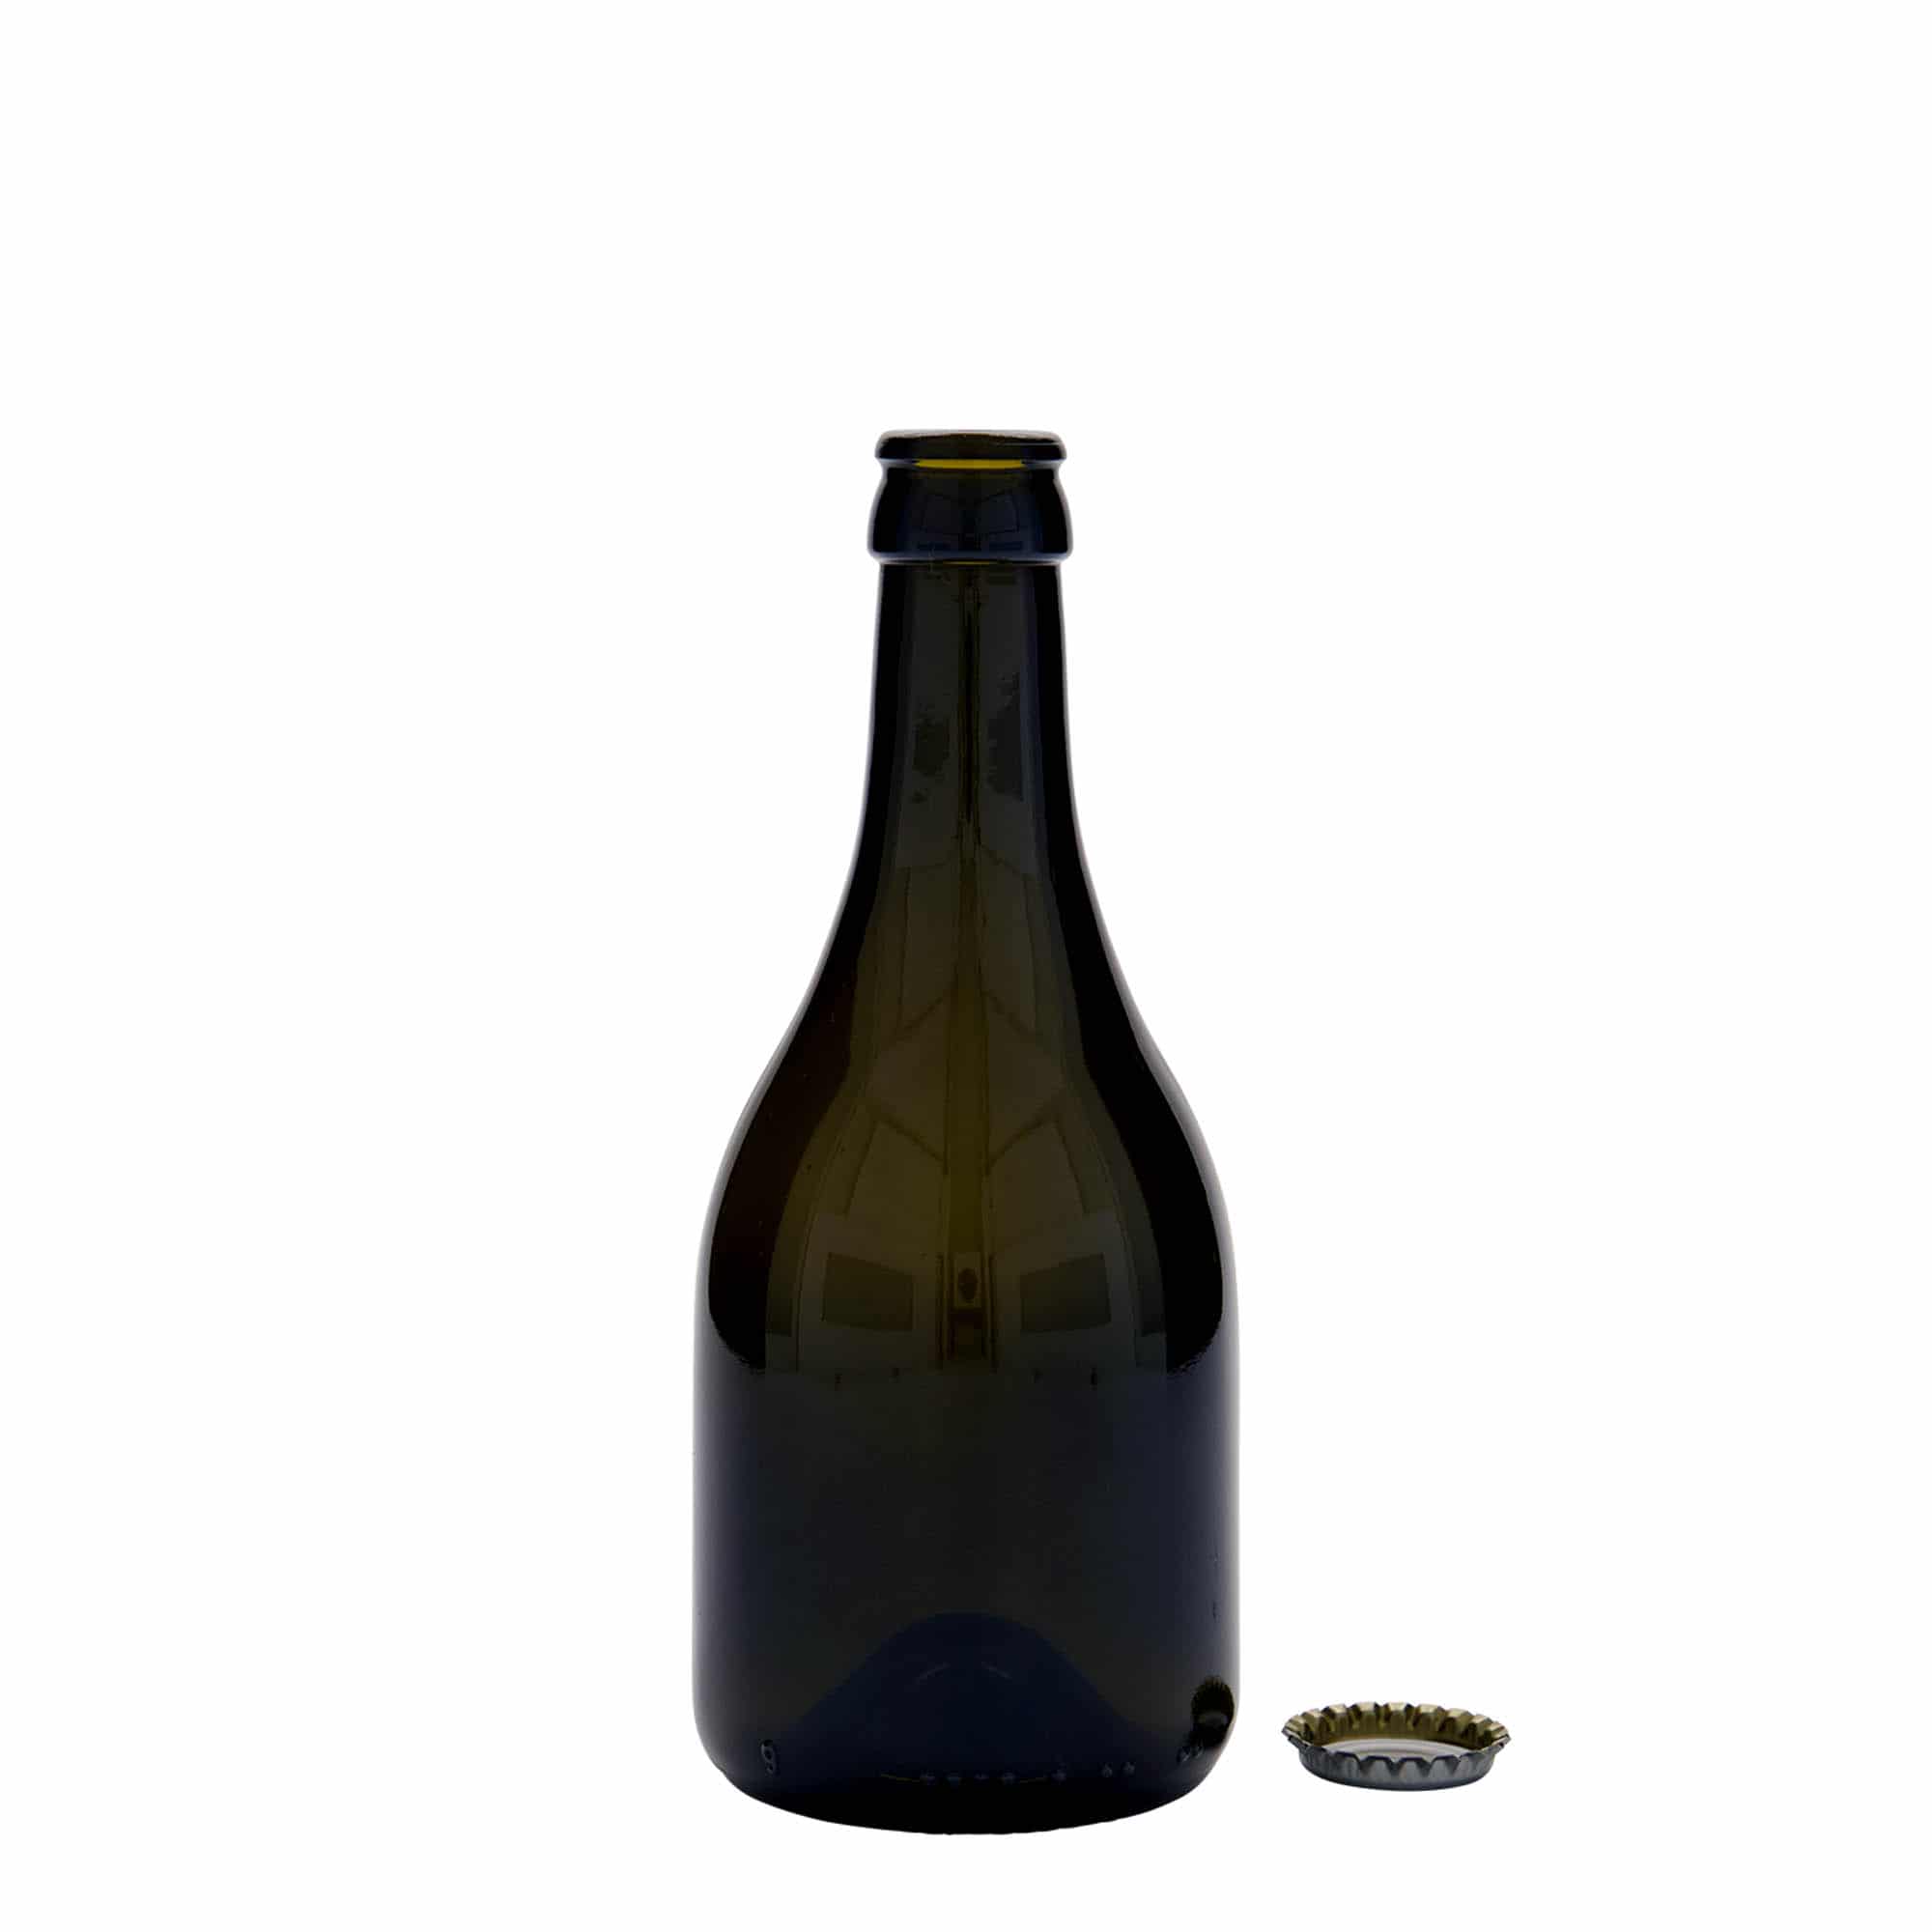 330 ml ölflaska 'Horta', glas, antikgrön, mynning: kronkapsyl